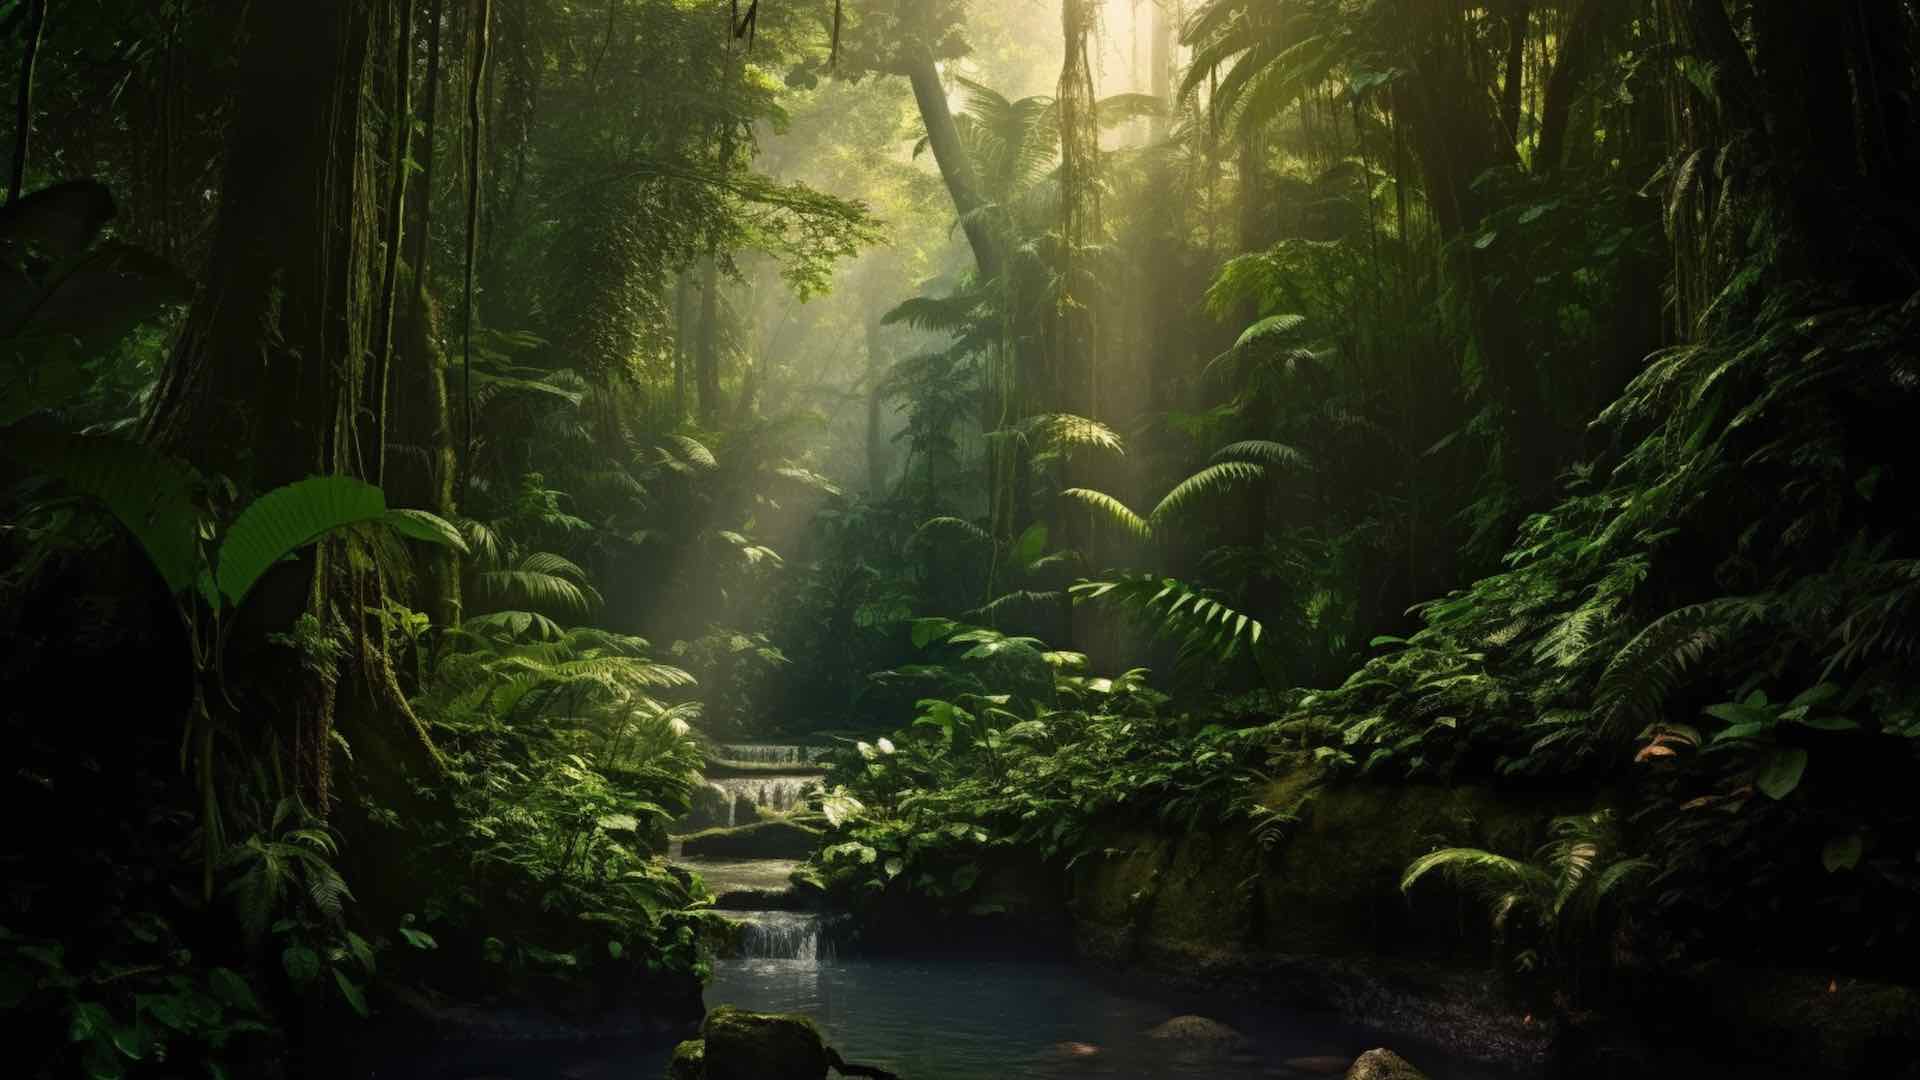 $1.1 billion program launched to preserve Amazon rainforest